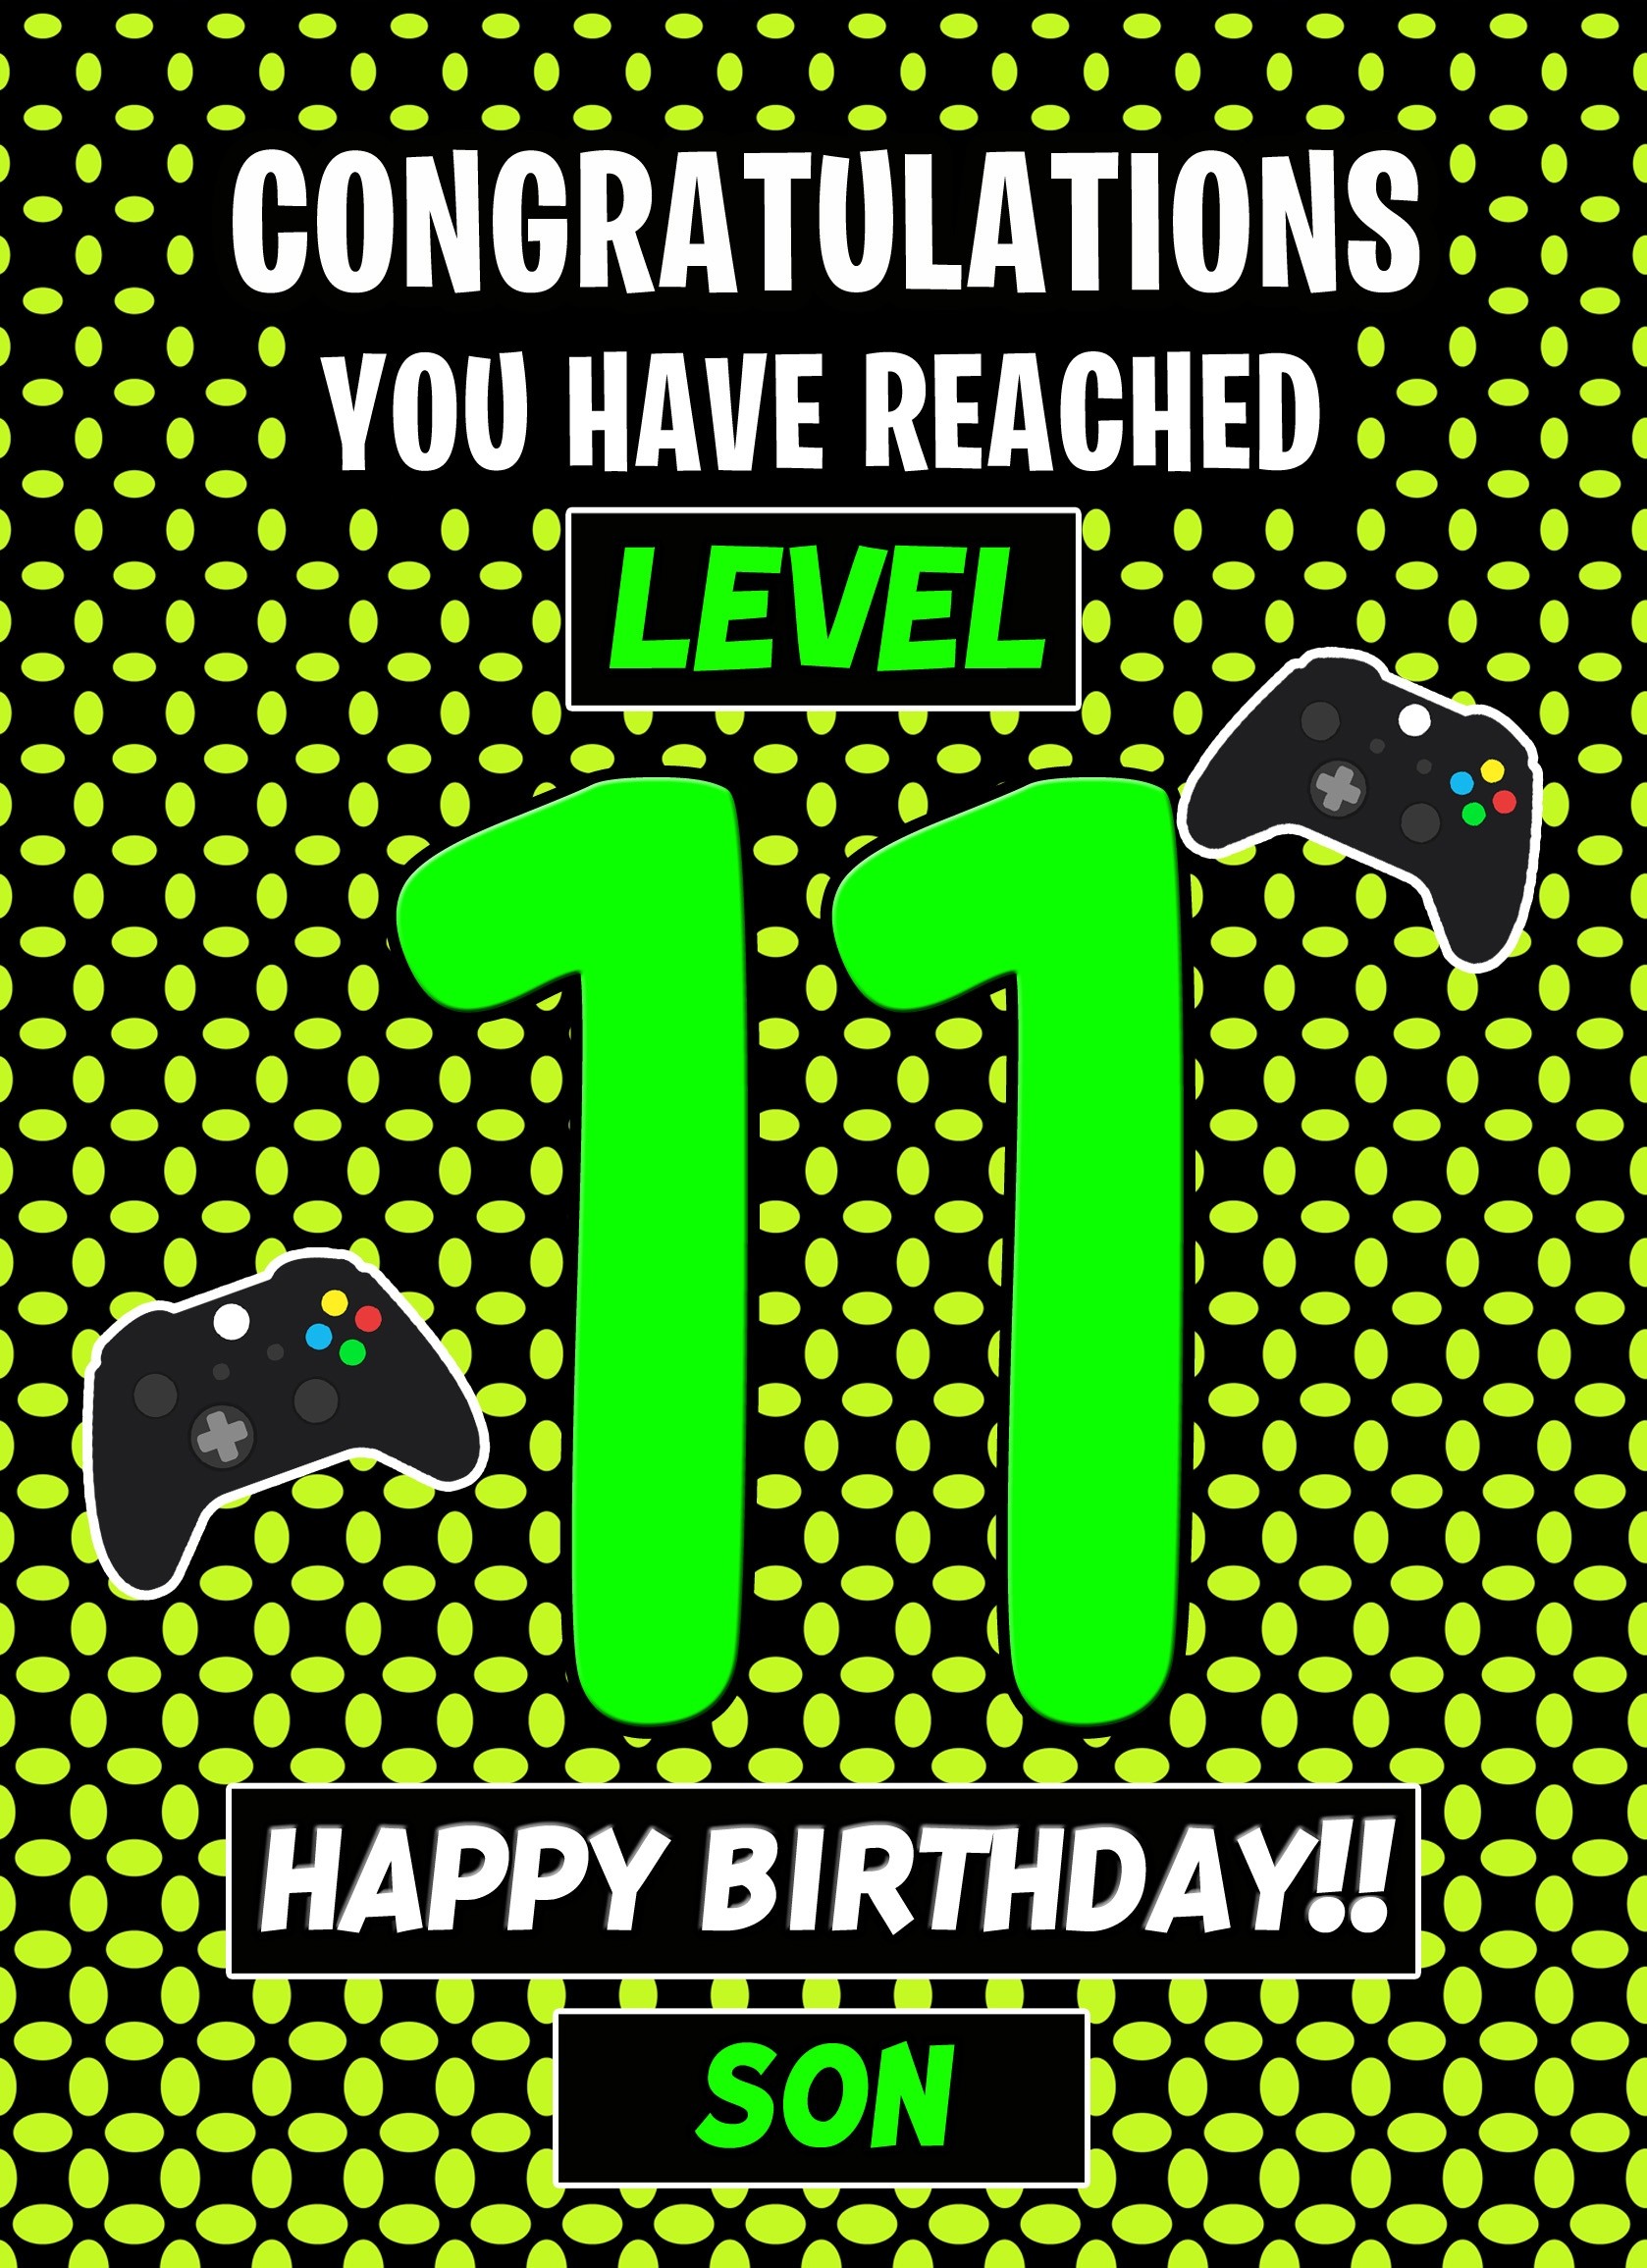 11th Level Gamer Birthday Card (Son)